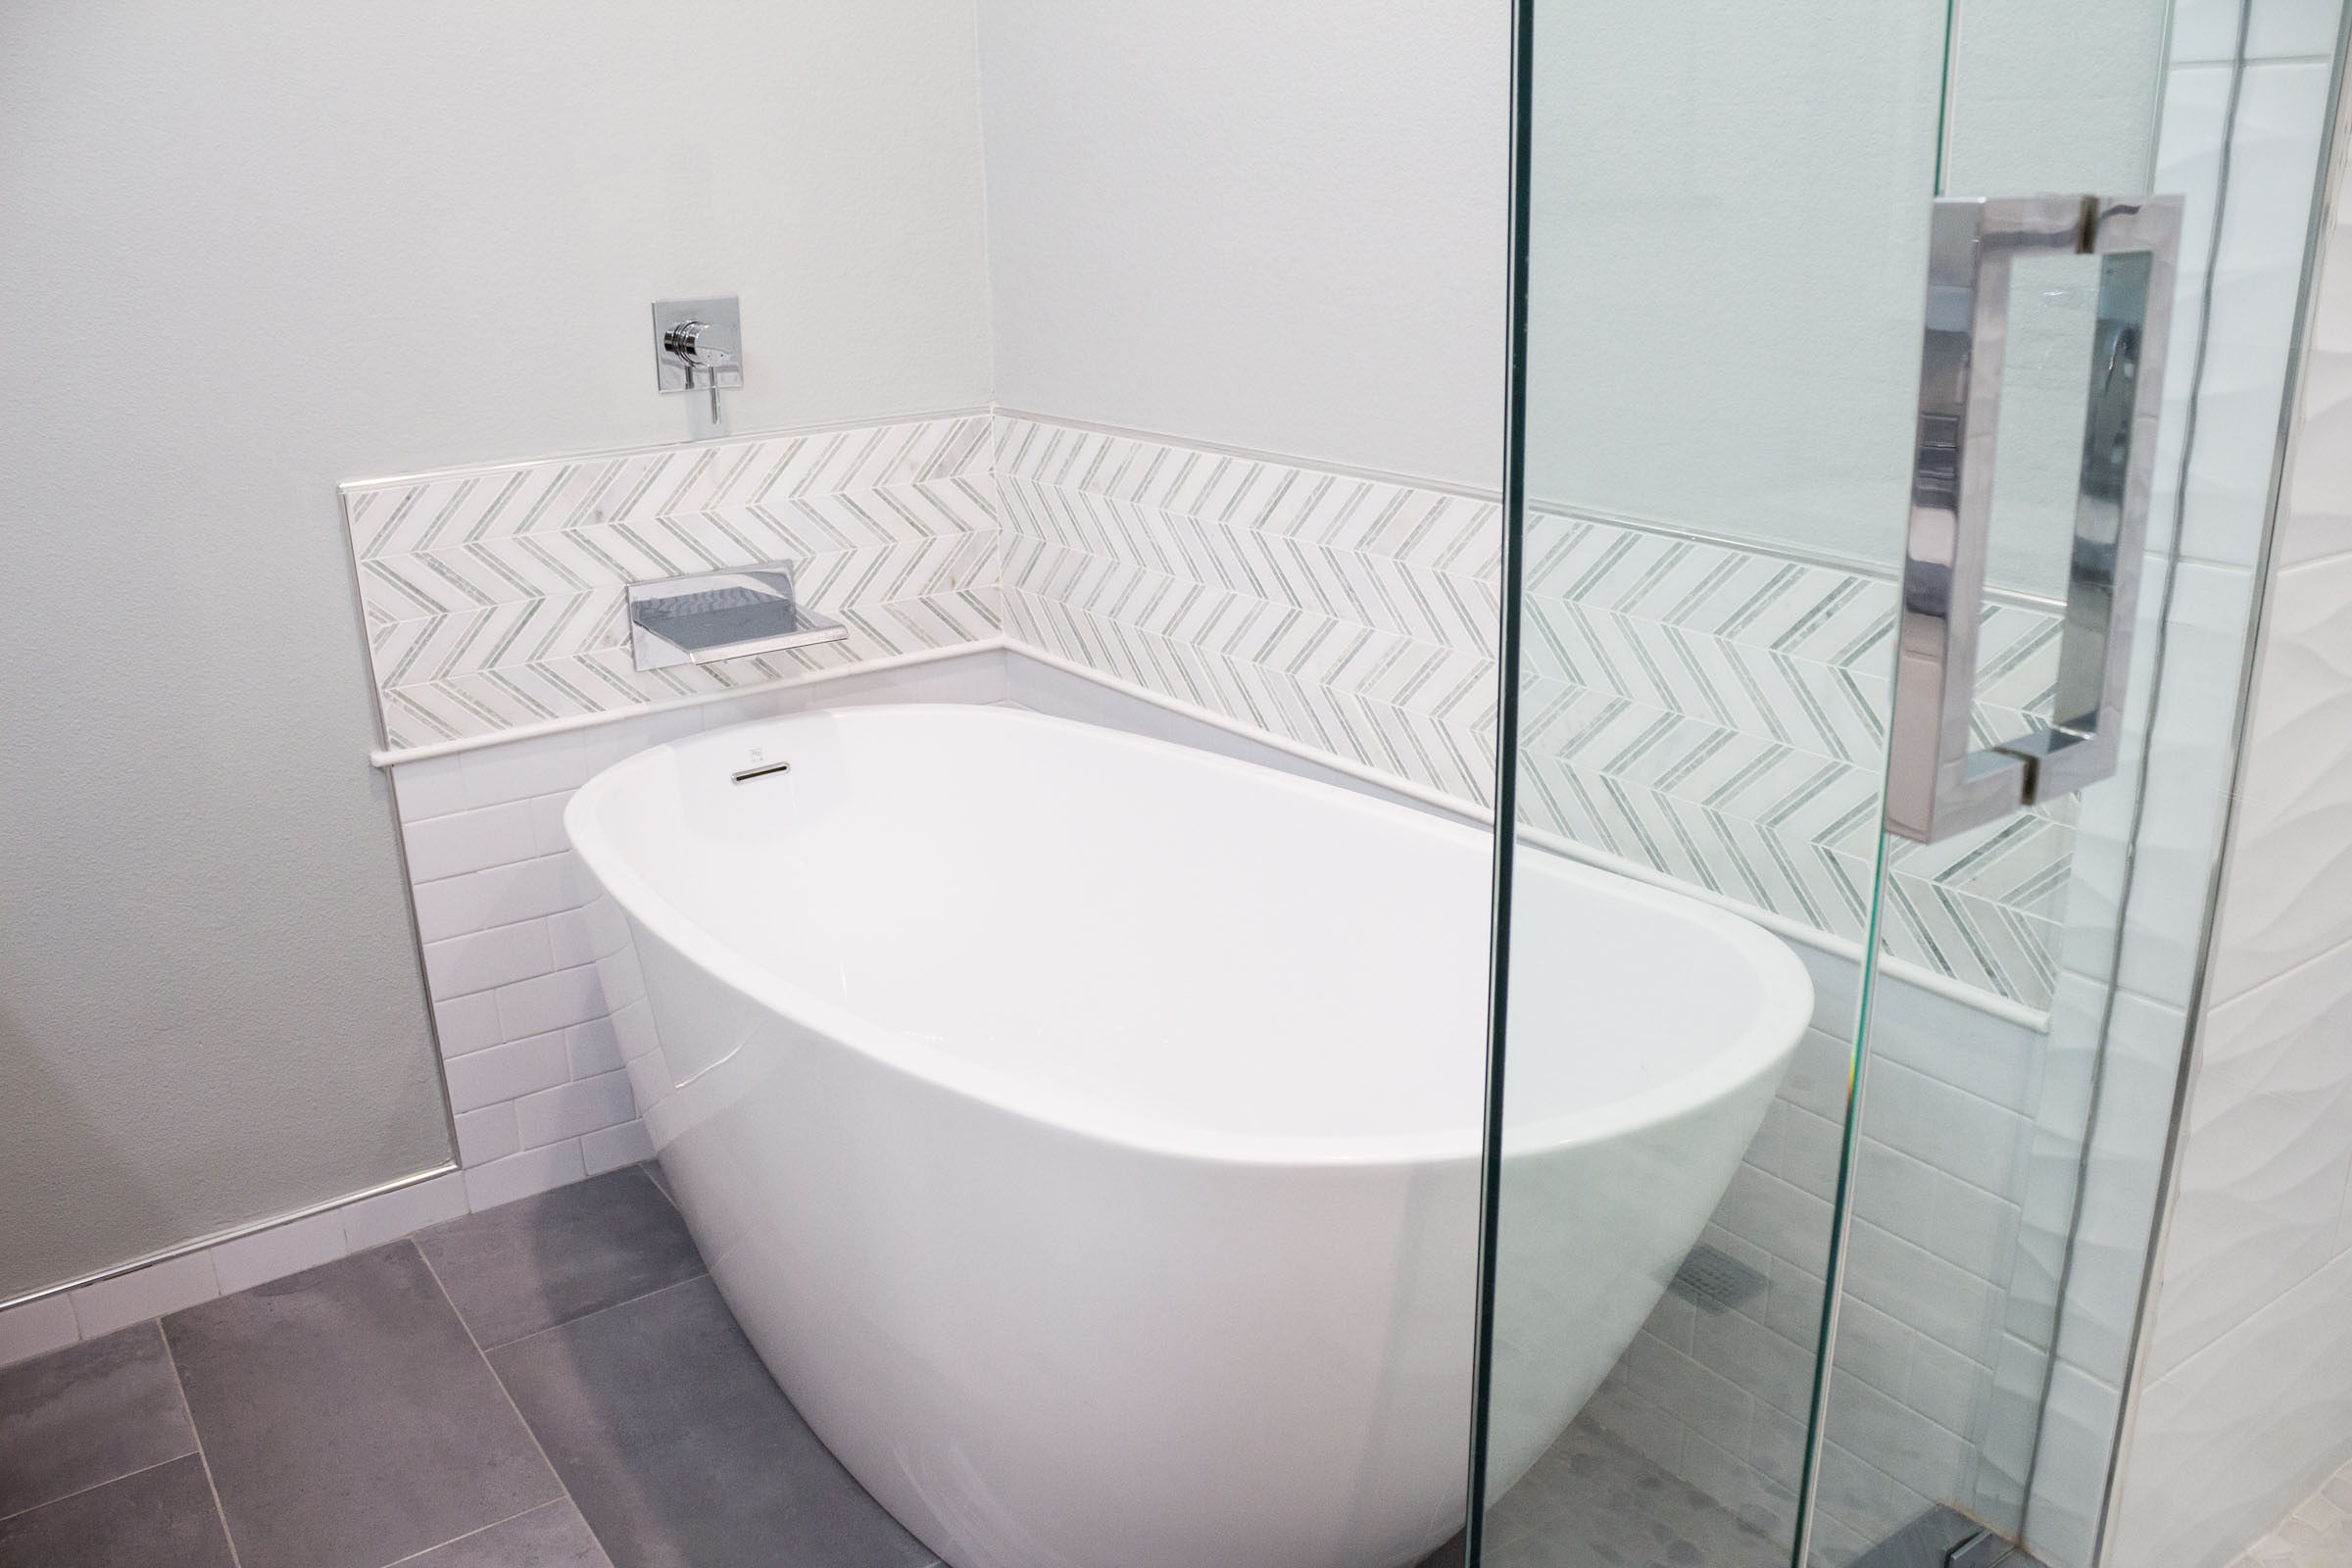 Bathroom remodel with white pedestal tub, chevron backsplash, grey tile, and chrome waterfall faucet